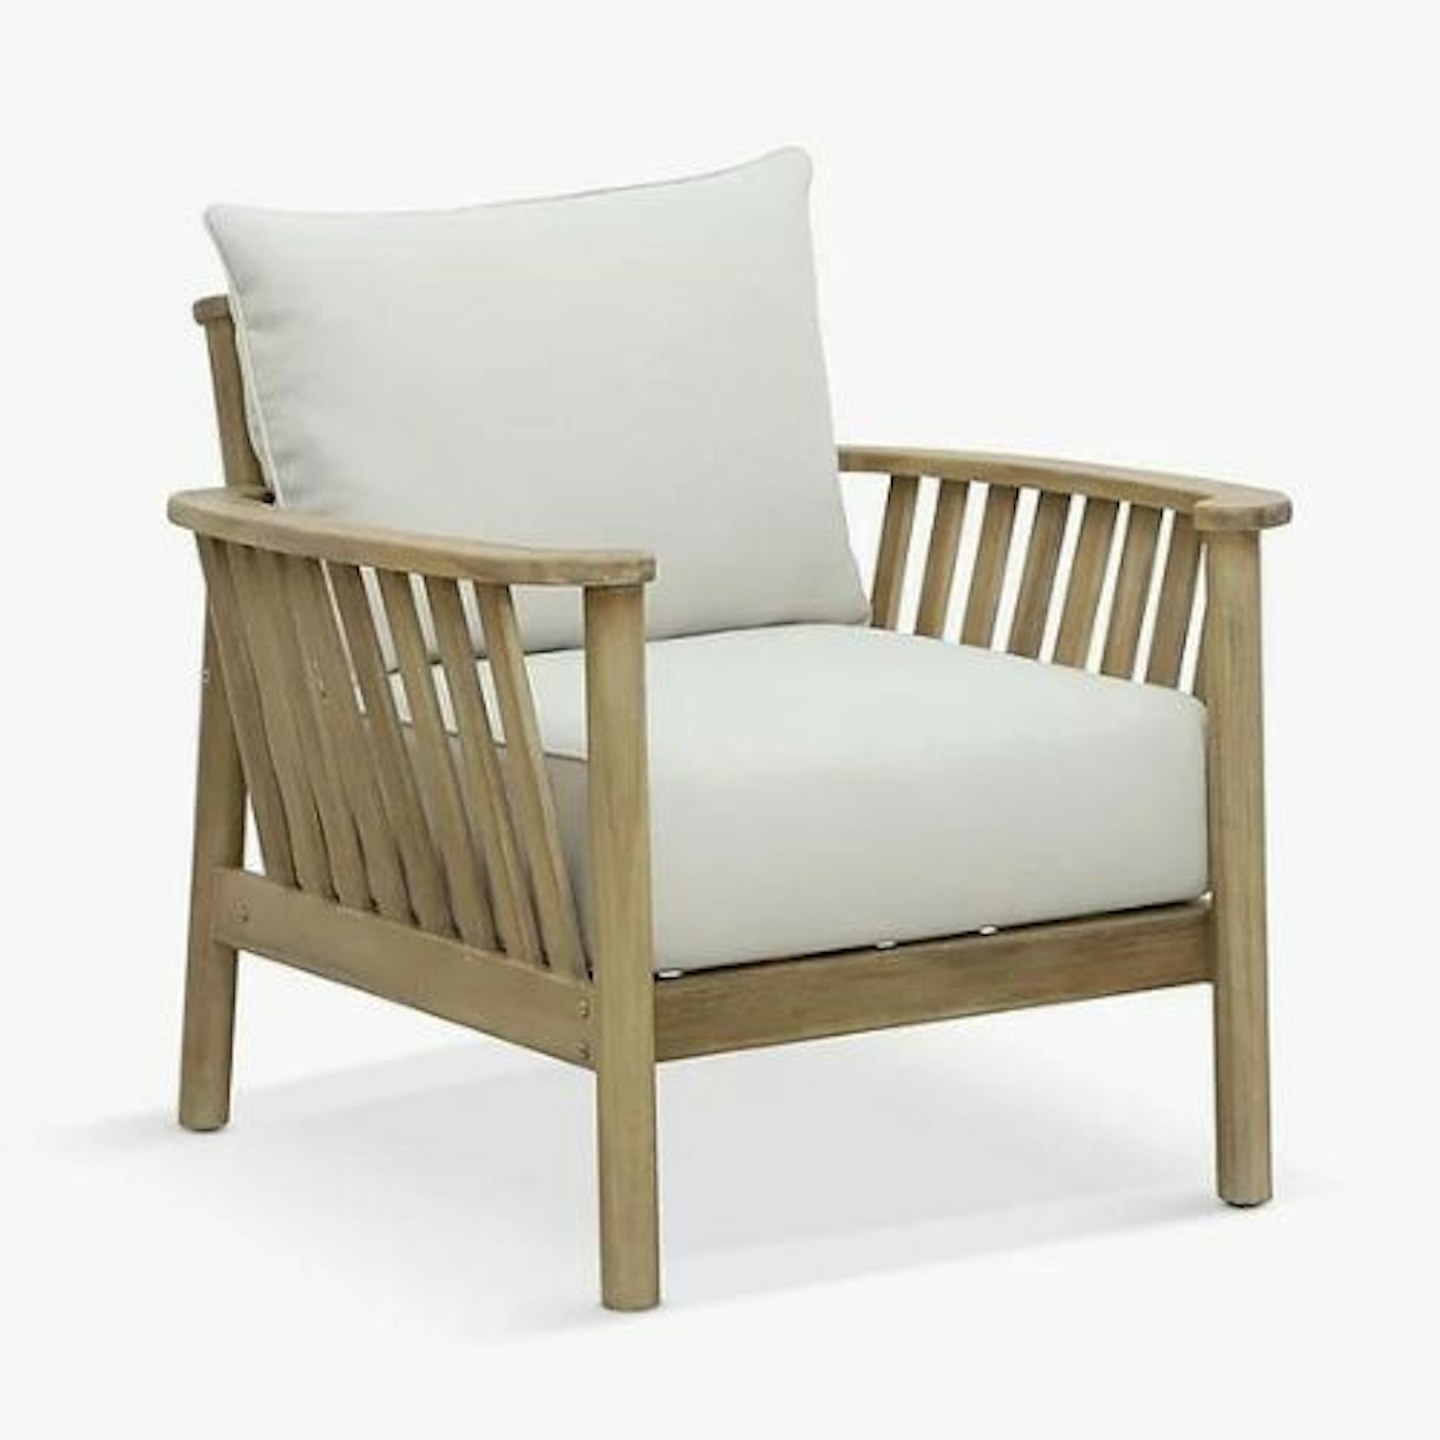 John Lewis Boardwalk Garden Lounge Chair